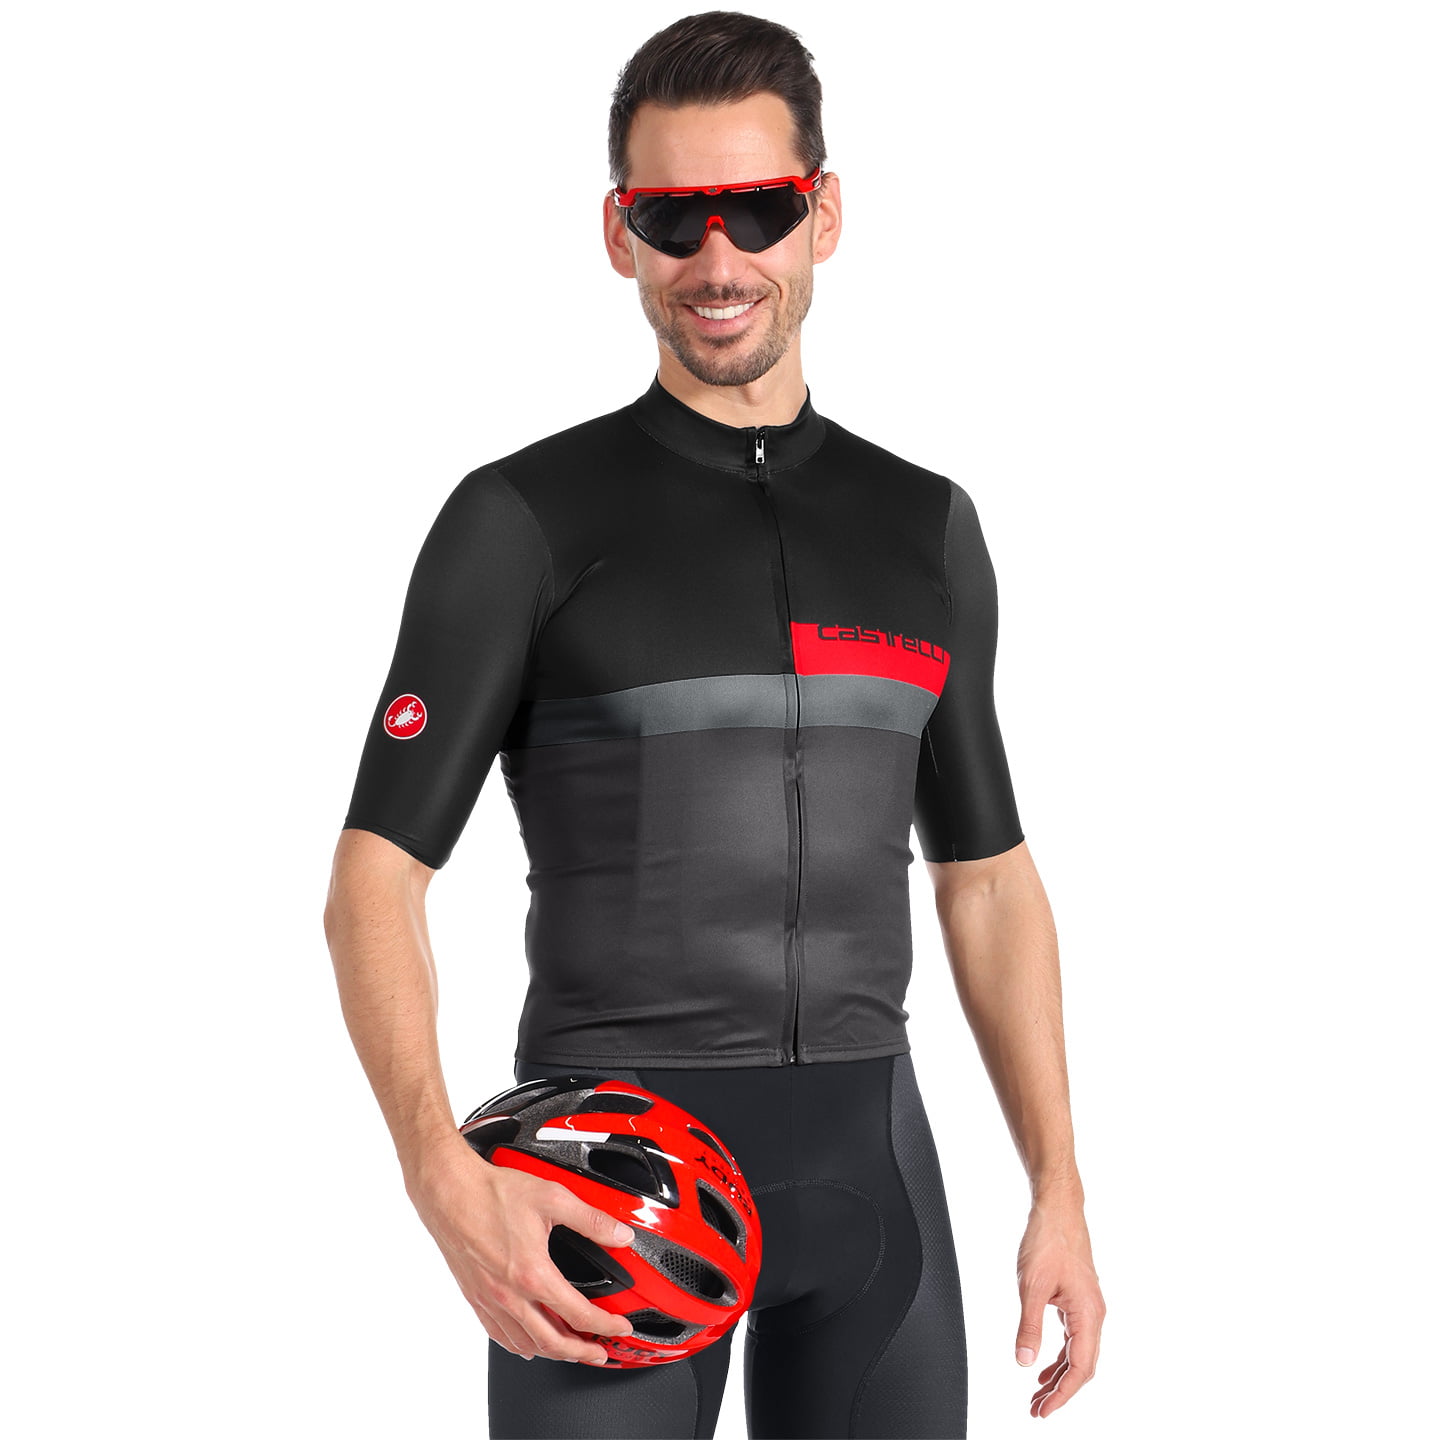 CASTELLI A Blocco Short Sleeve Jersey Short Sleeve Jersey, for men, size L, Cycling jersey, Cycling clothing